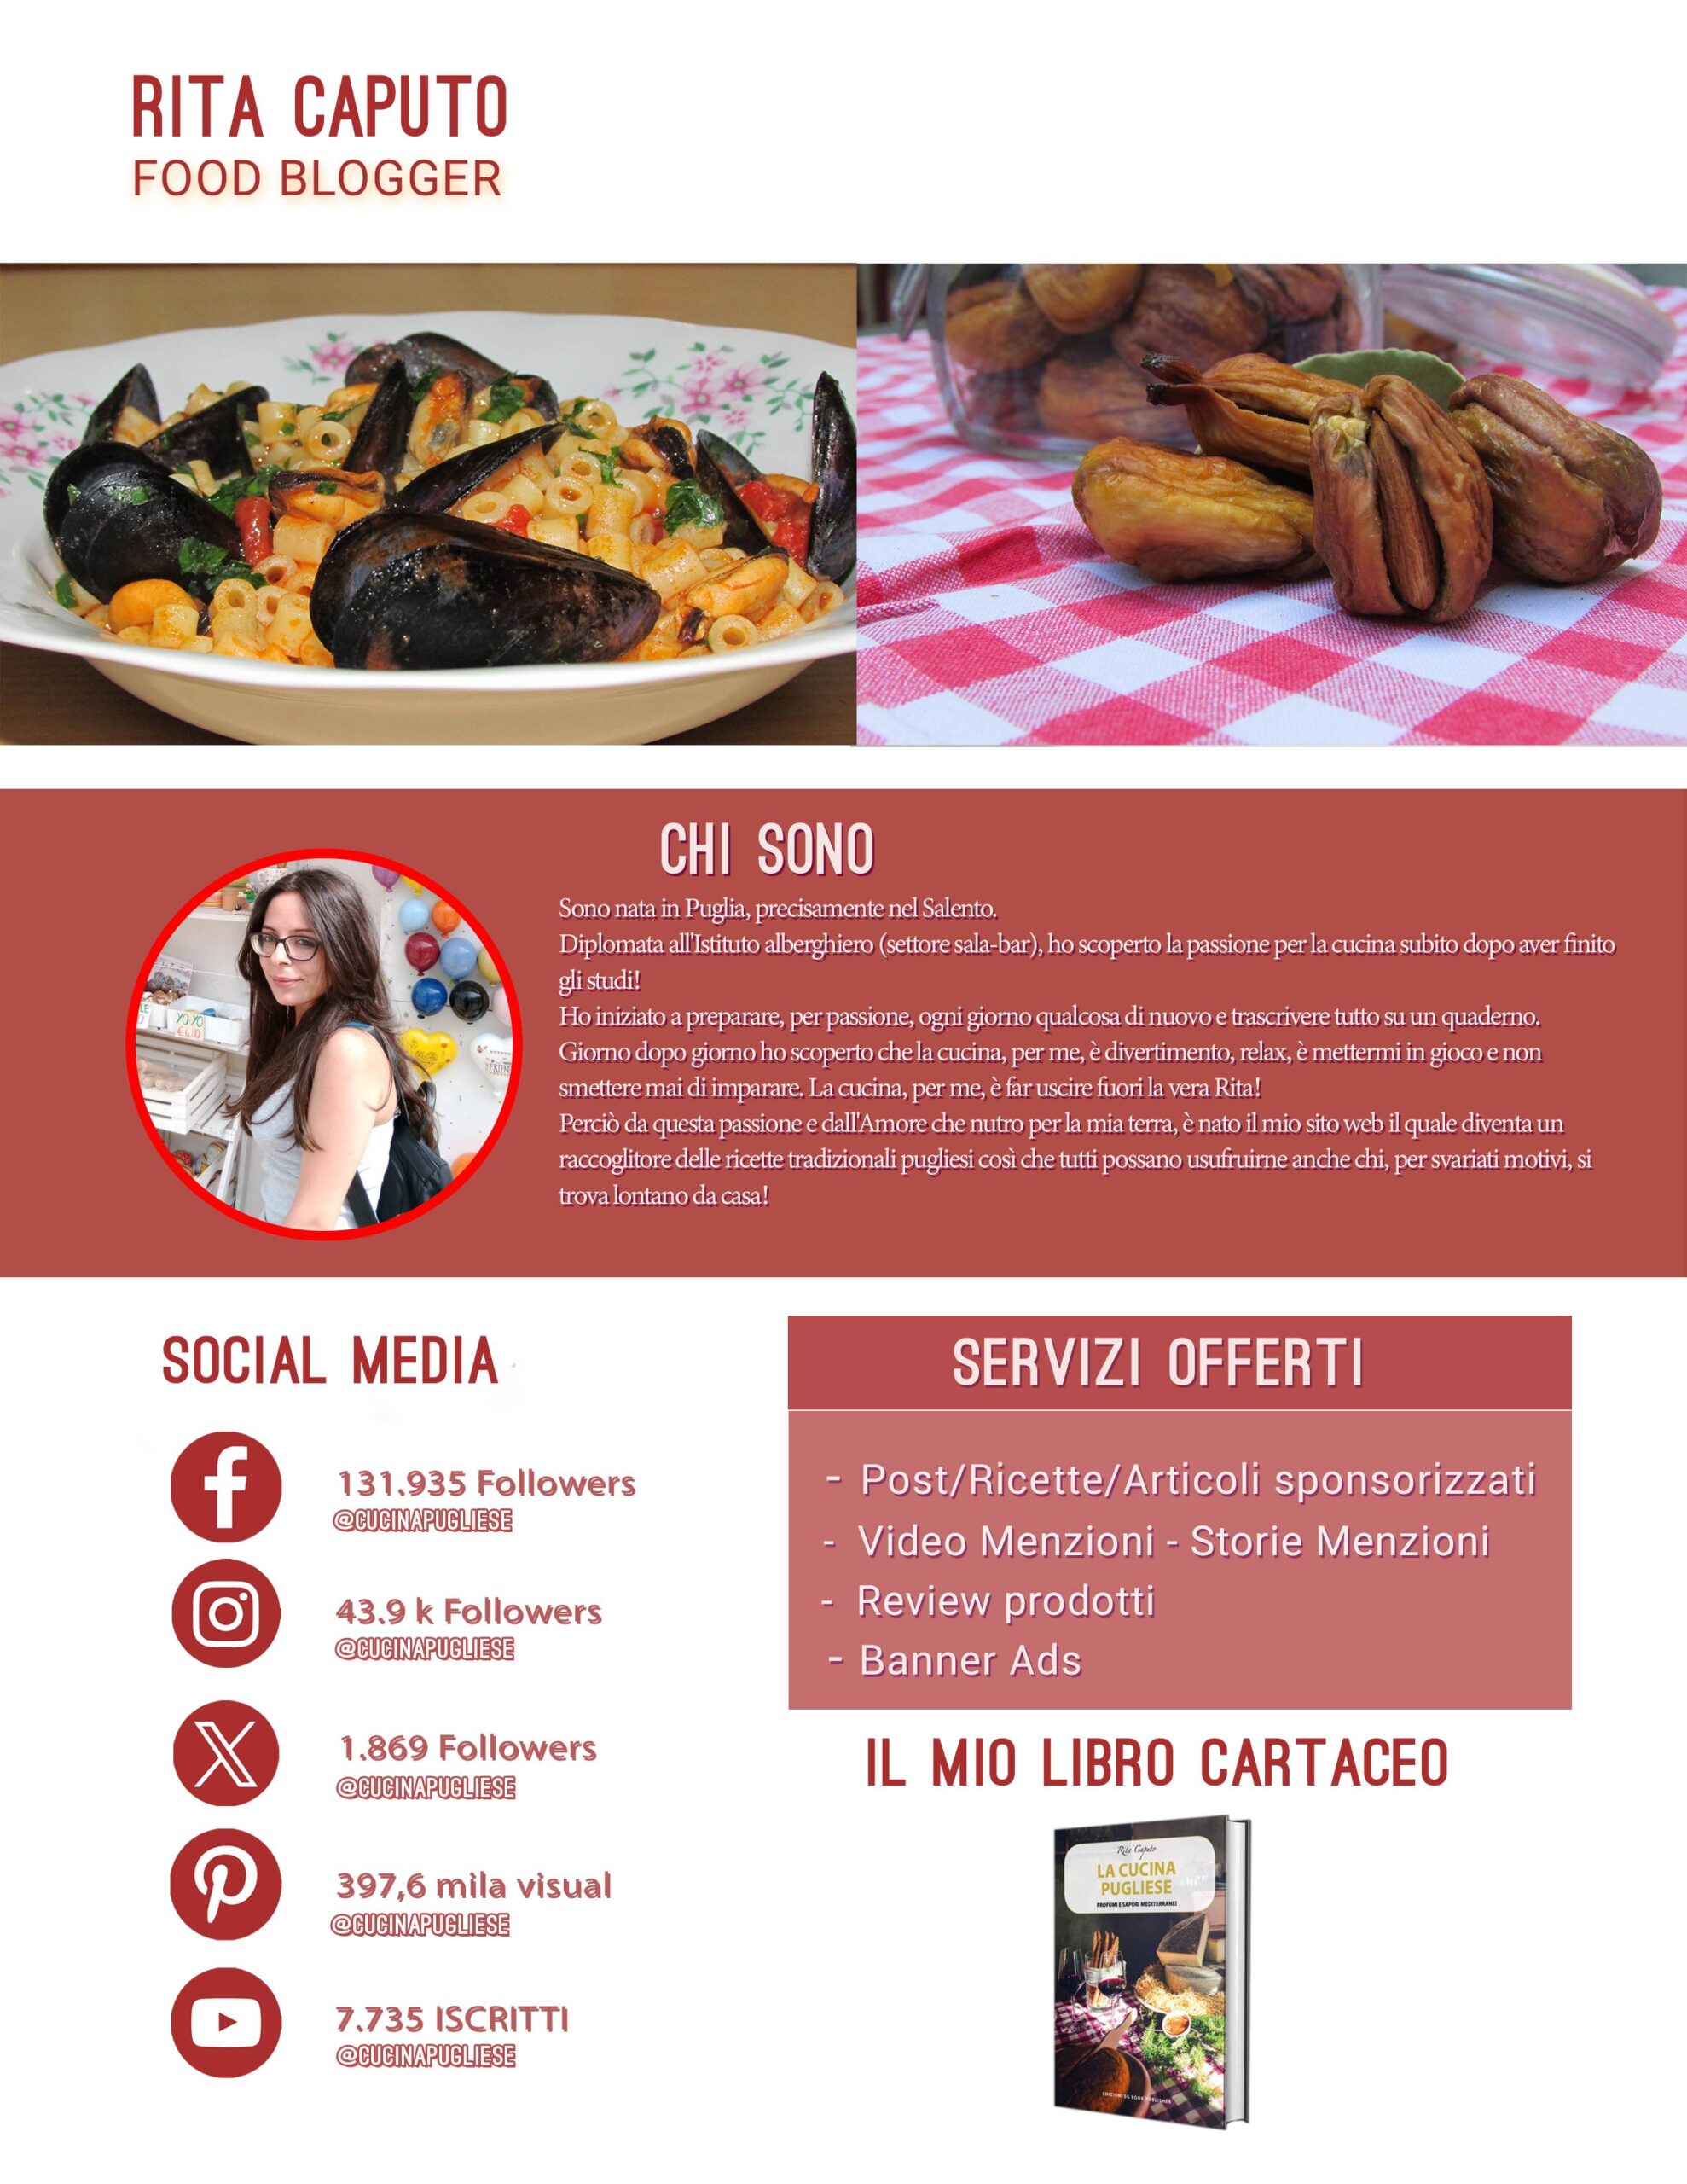 MediaKit La Cucina Pugliese di Rita Caputo Food Blogger Puglia